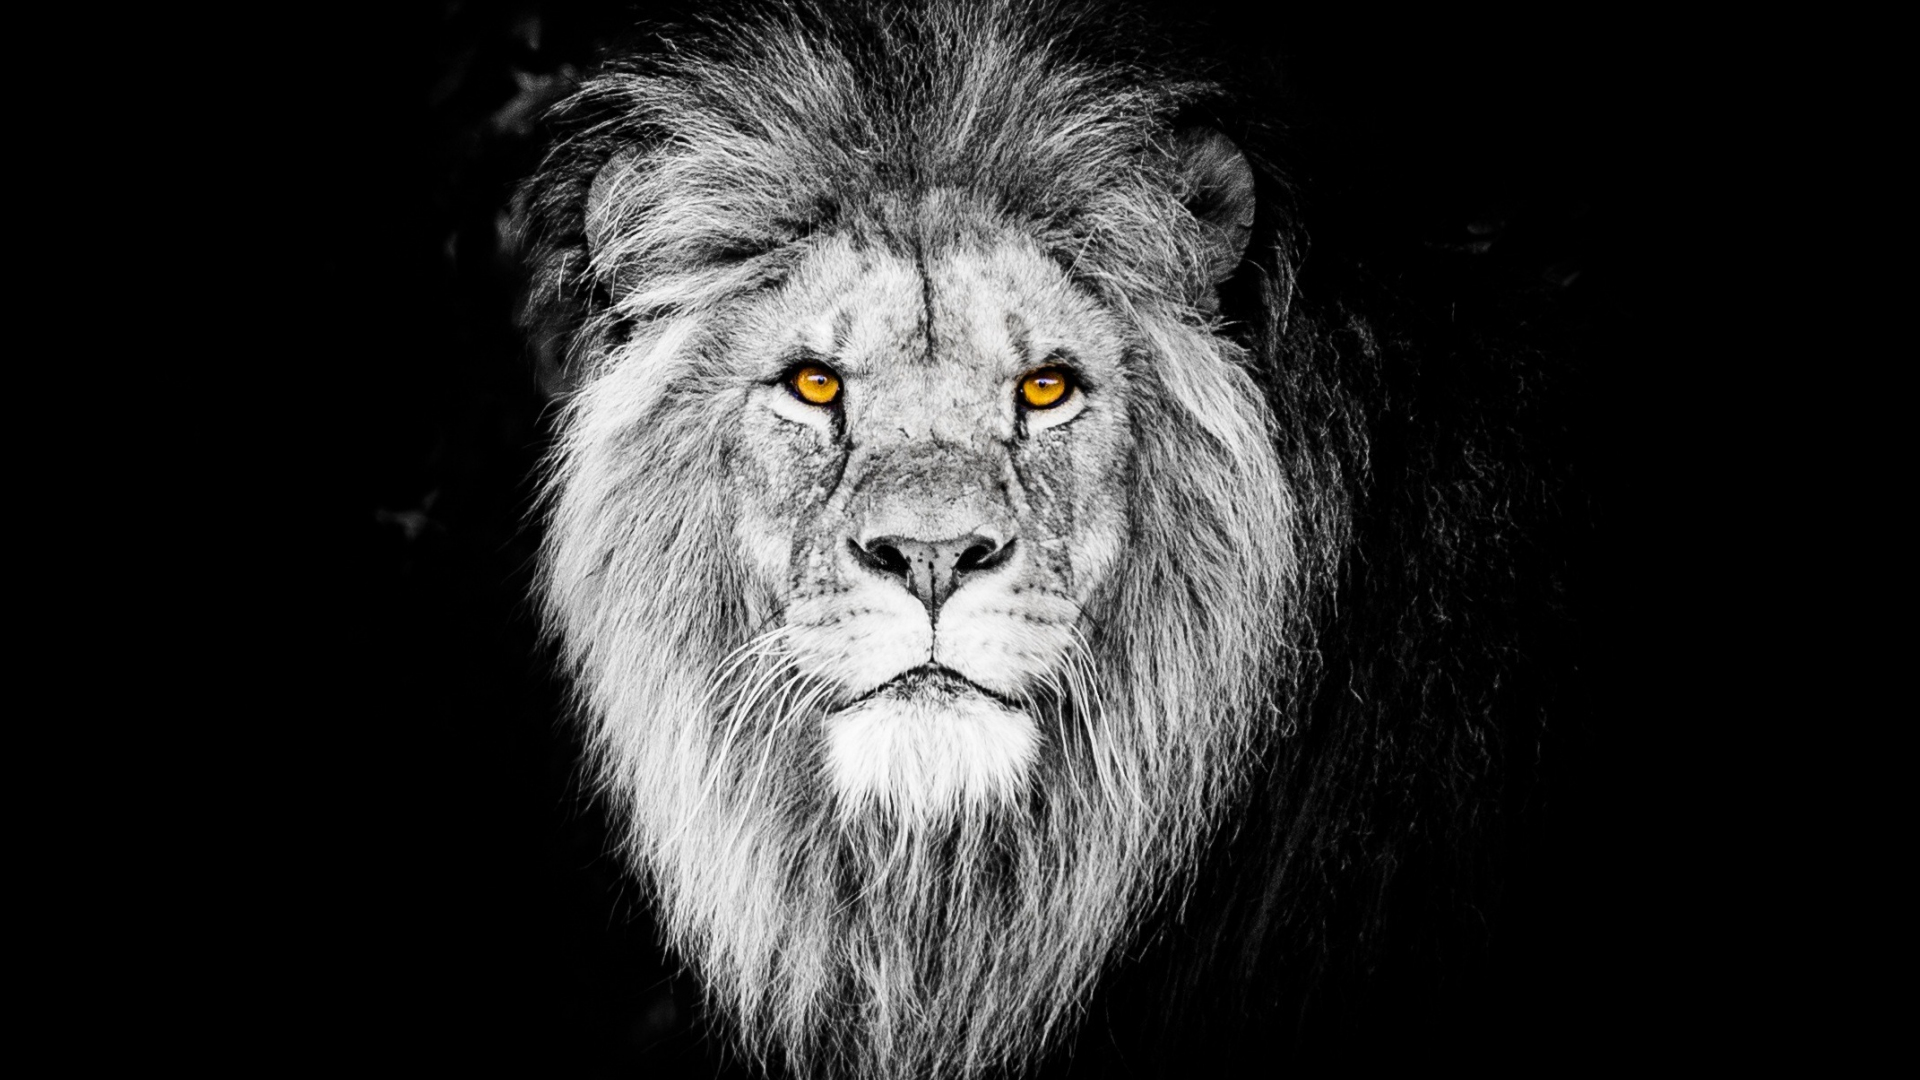 Download wallpaper: Lion king in wild Africa 1366x768